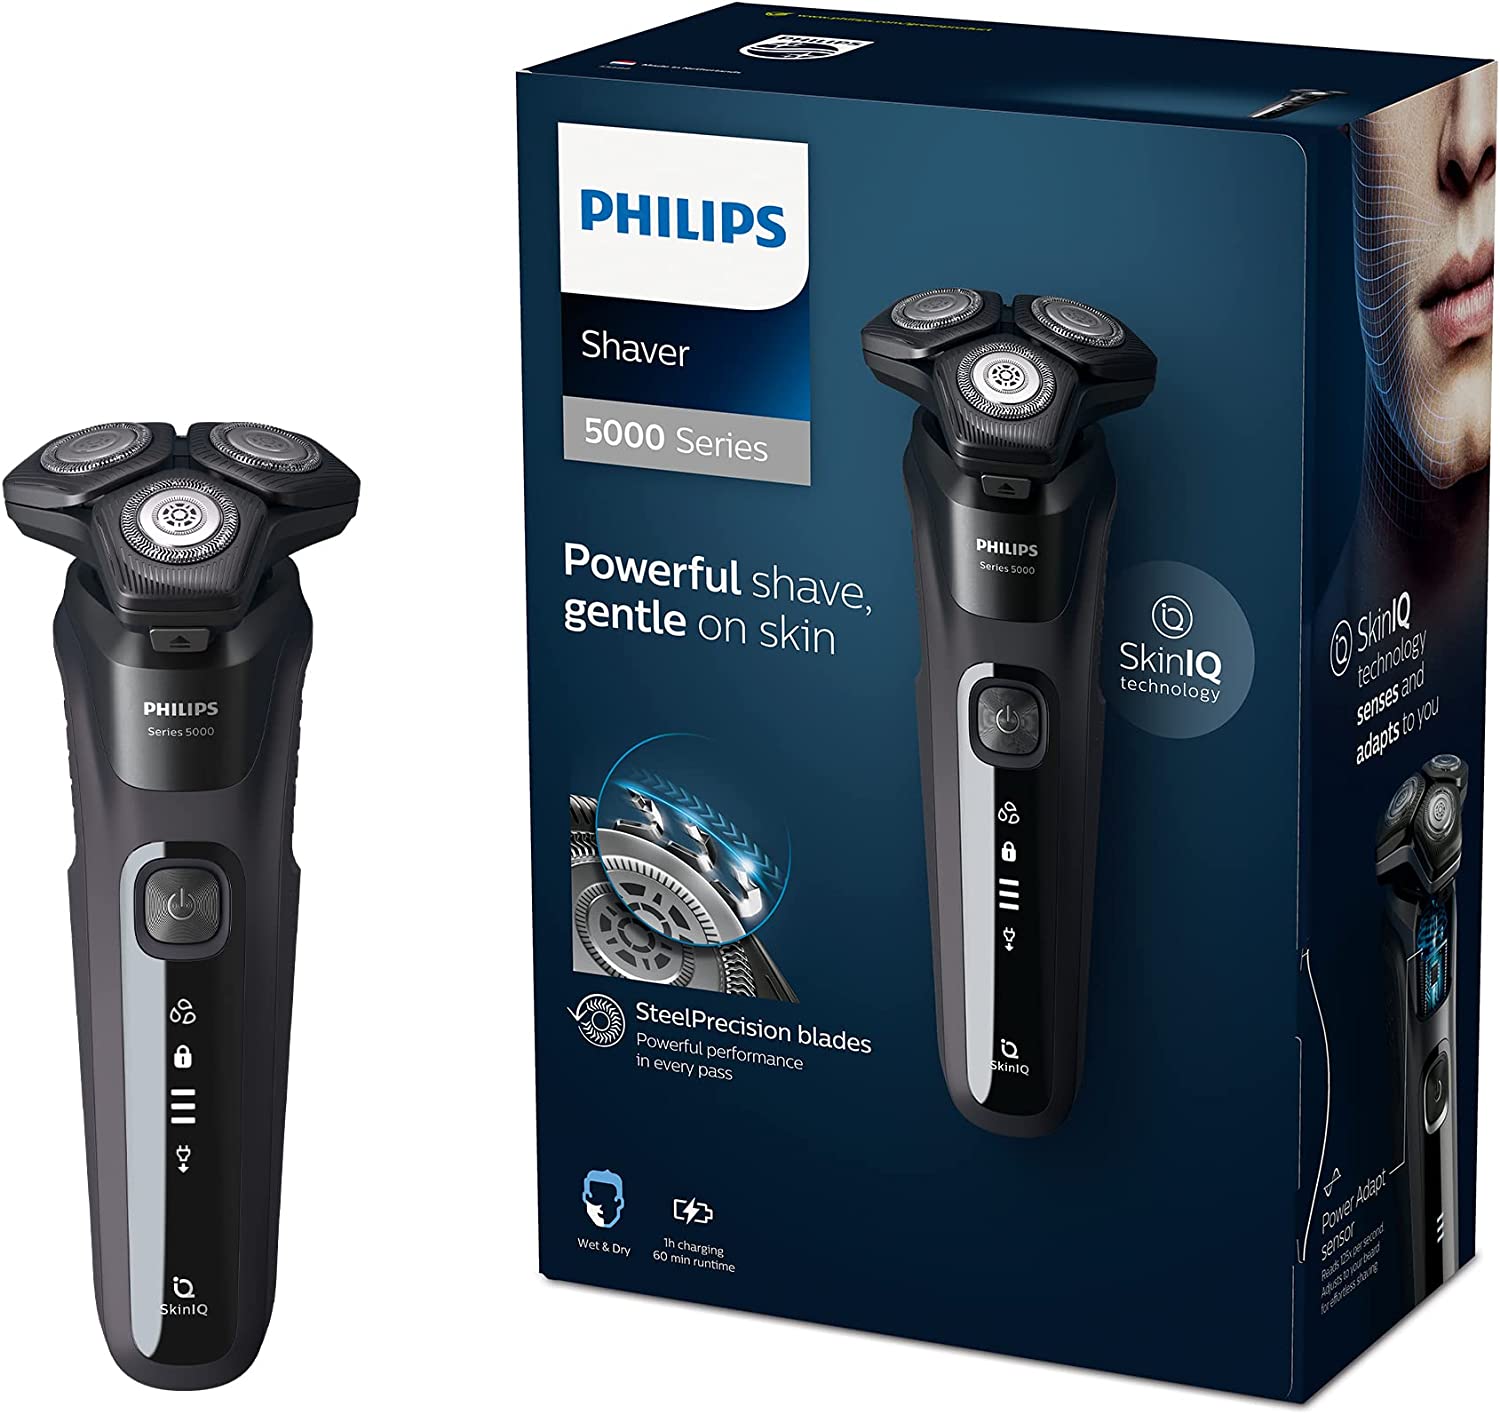 Philips Shaver Series 5000 versus Philips Shaver Series 3000 versus Philips Shaver Series 9000 versus Philips Shaver Series 7000